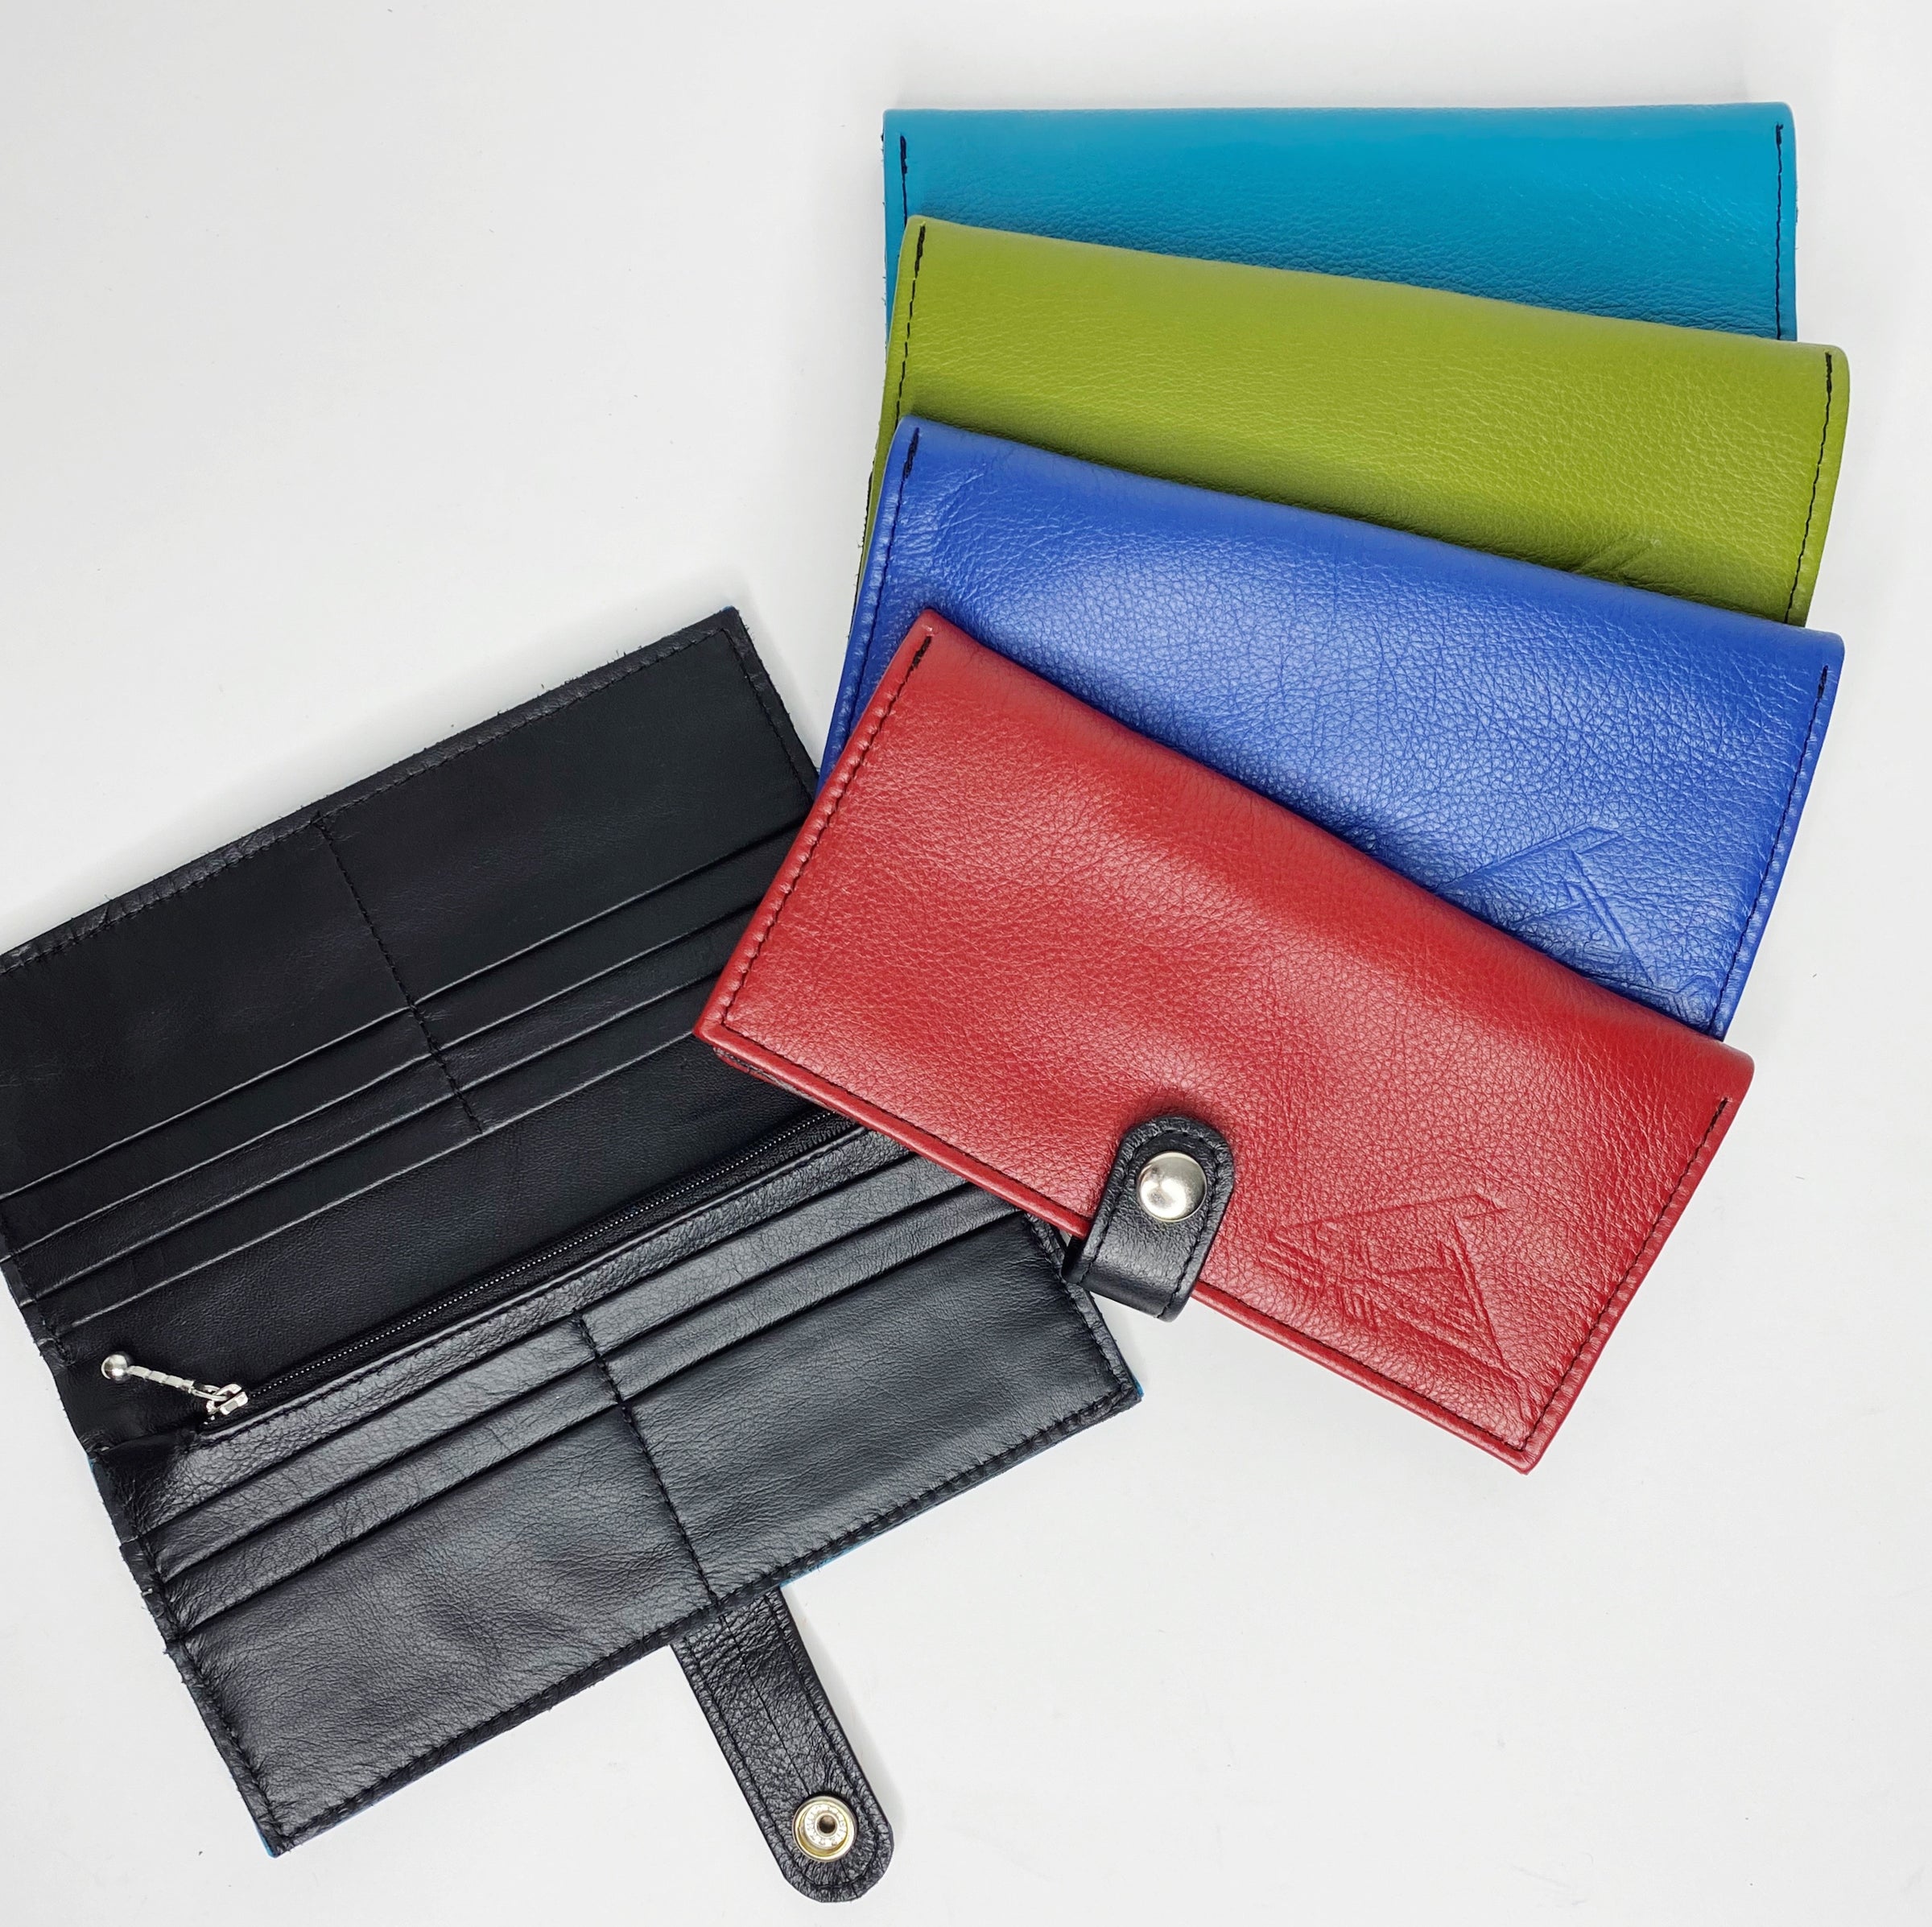 Dominique Ladies Soft Leather Purse/Wallet Flap Over | eBay